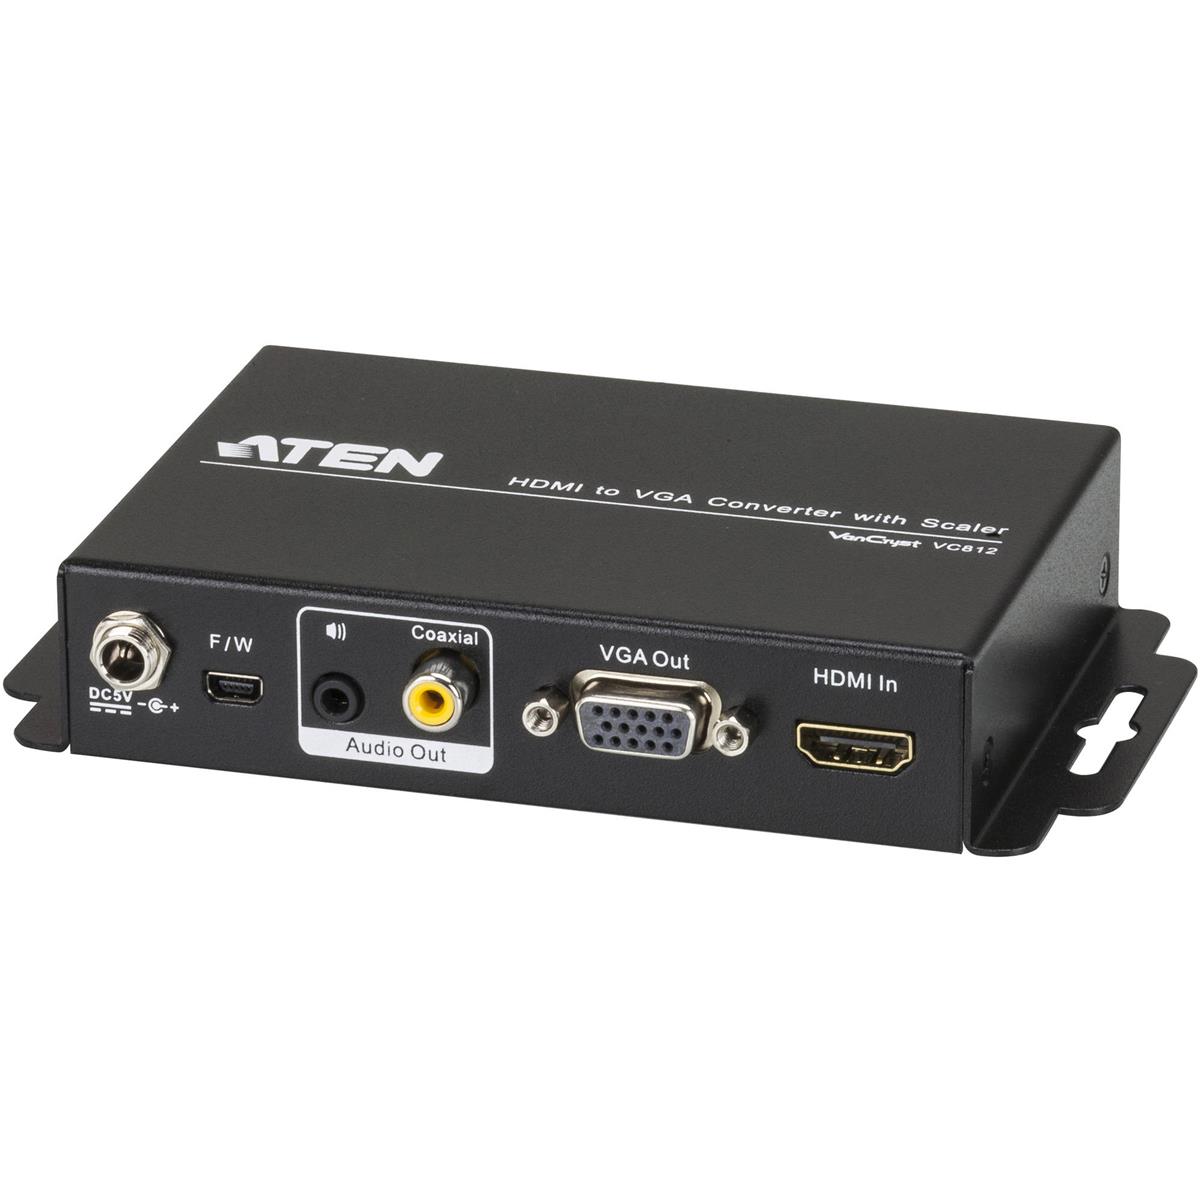 

Aten VC812 HDMI to VGA Converter with Scaler